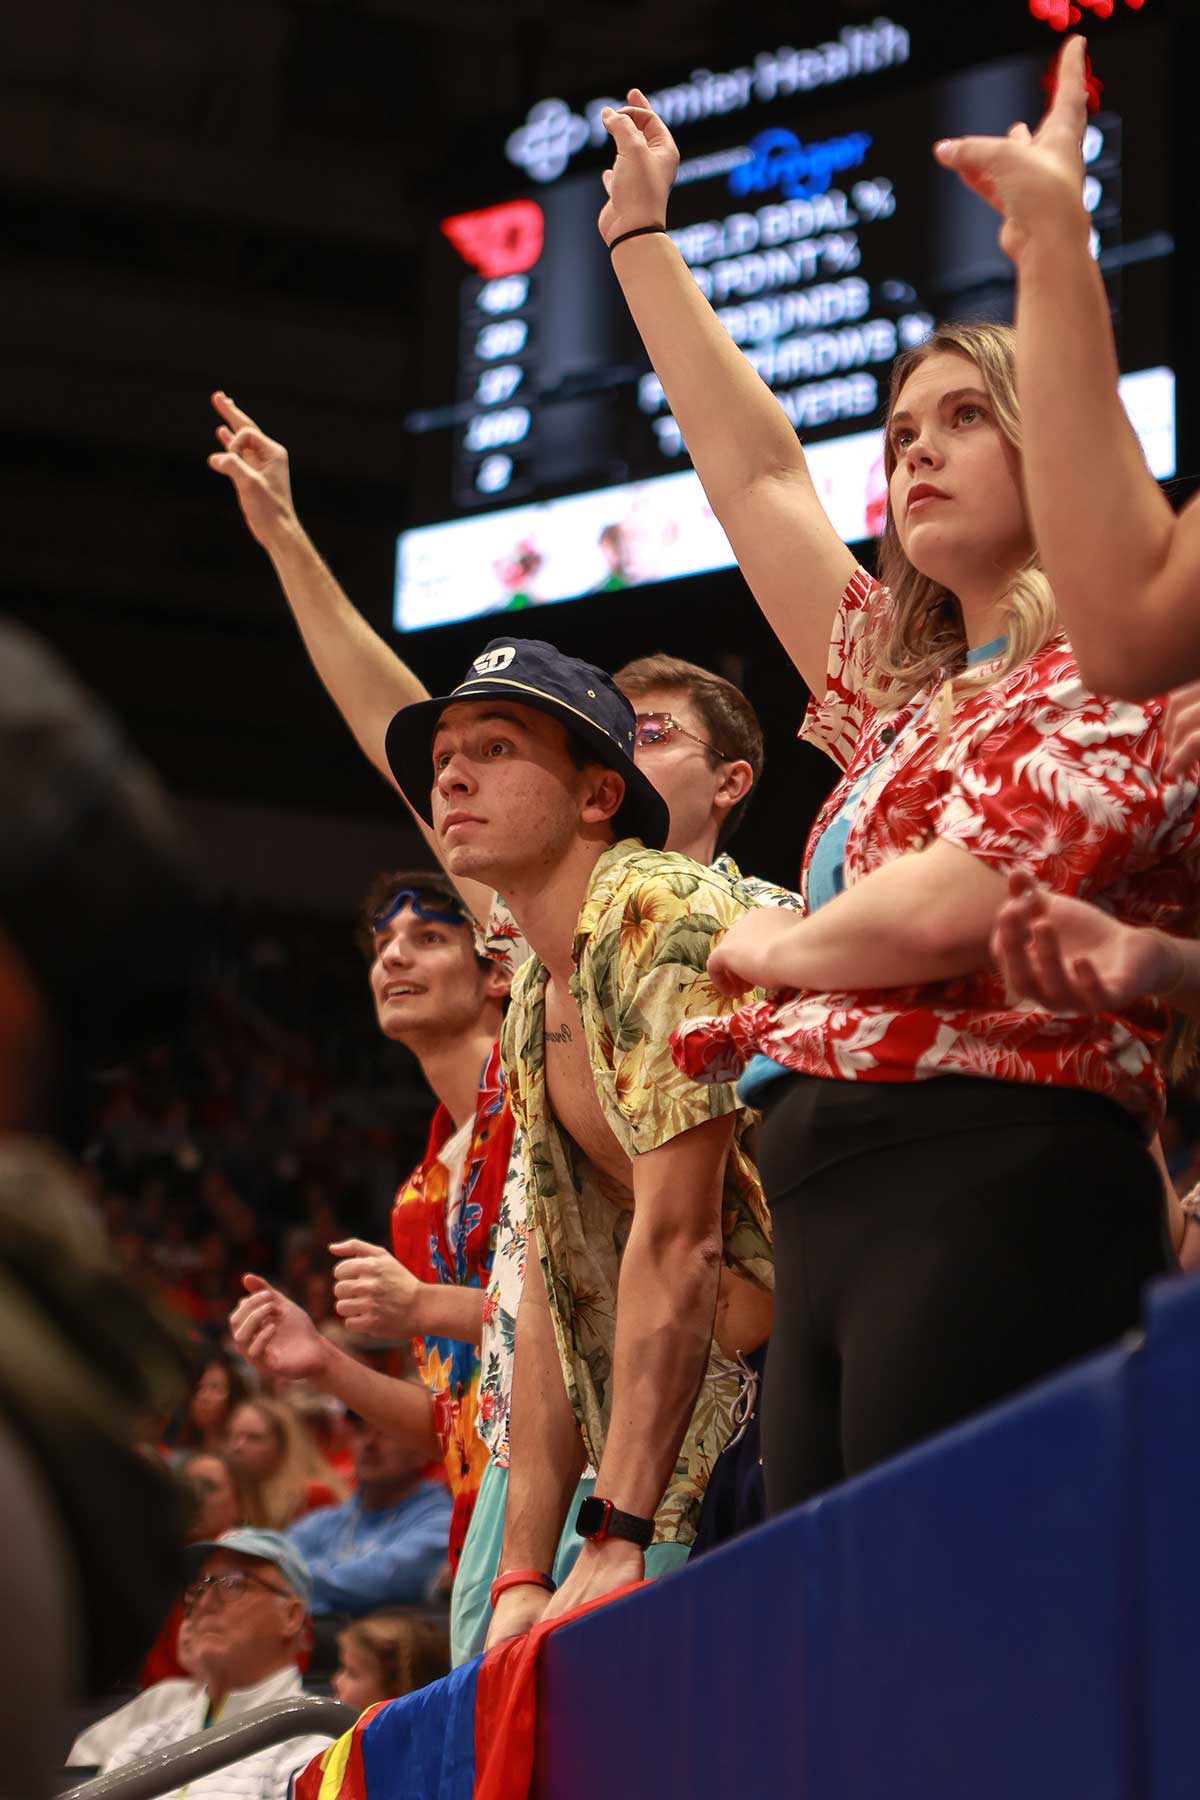 Students dressed in Hawaiian shirts looking intently.